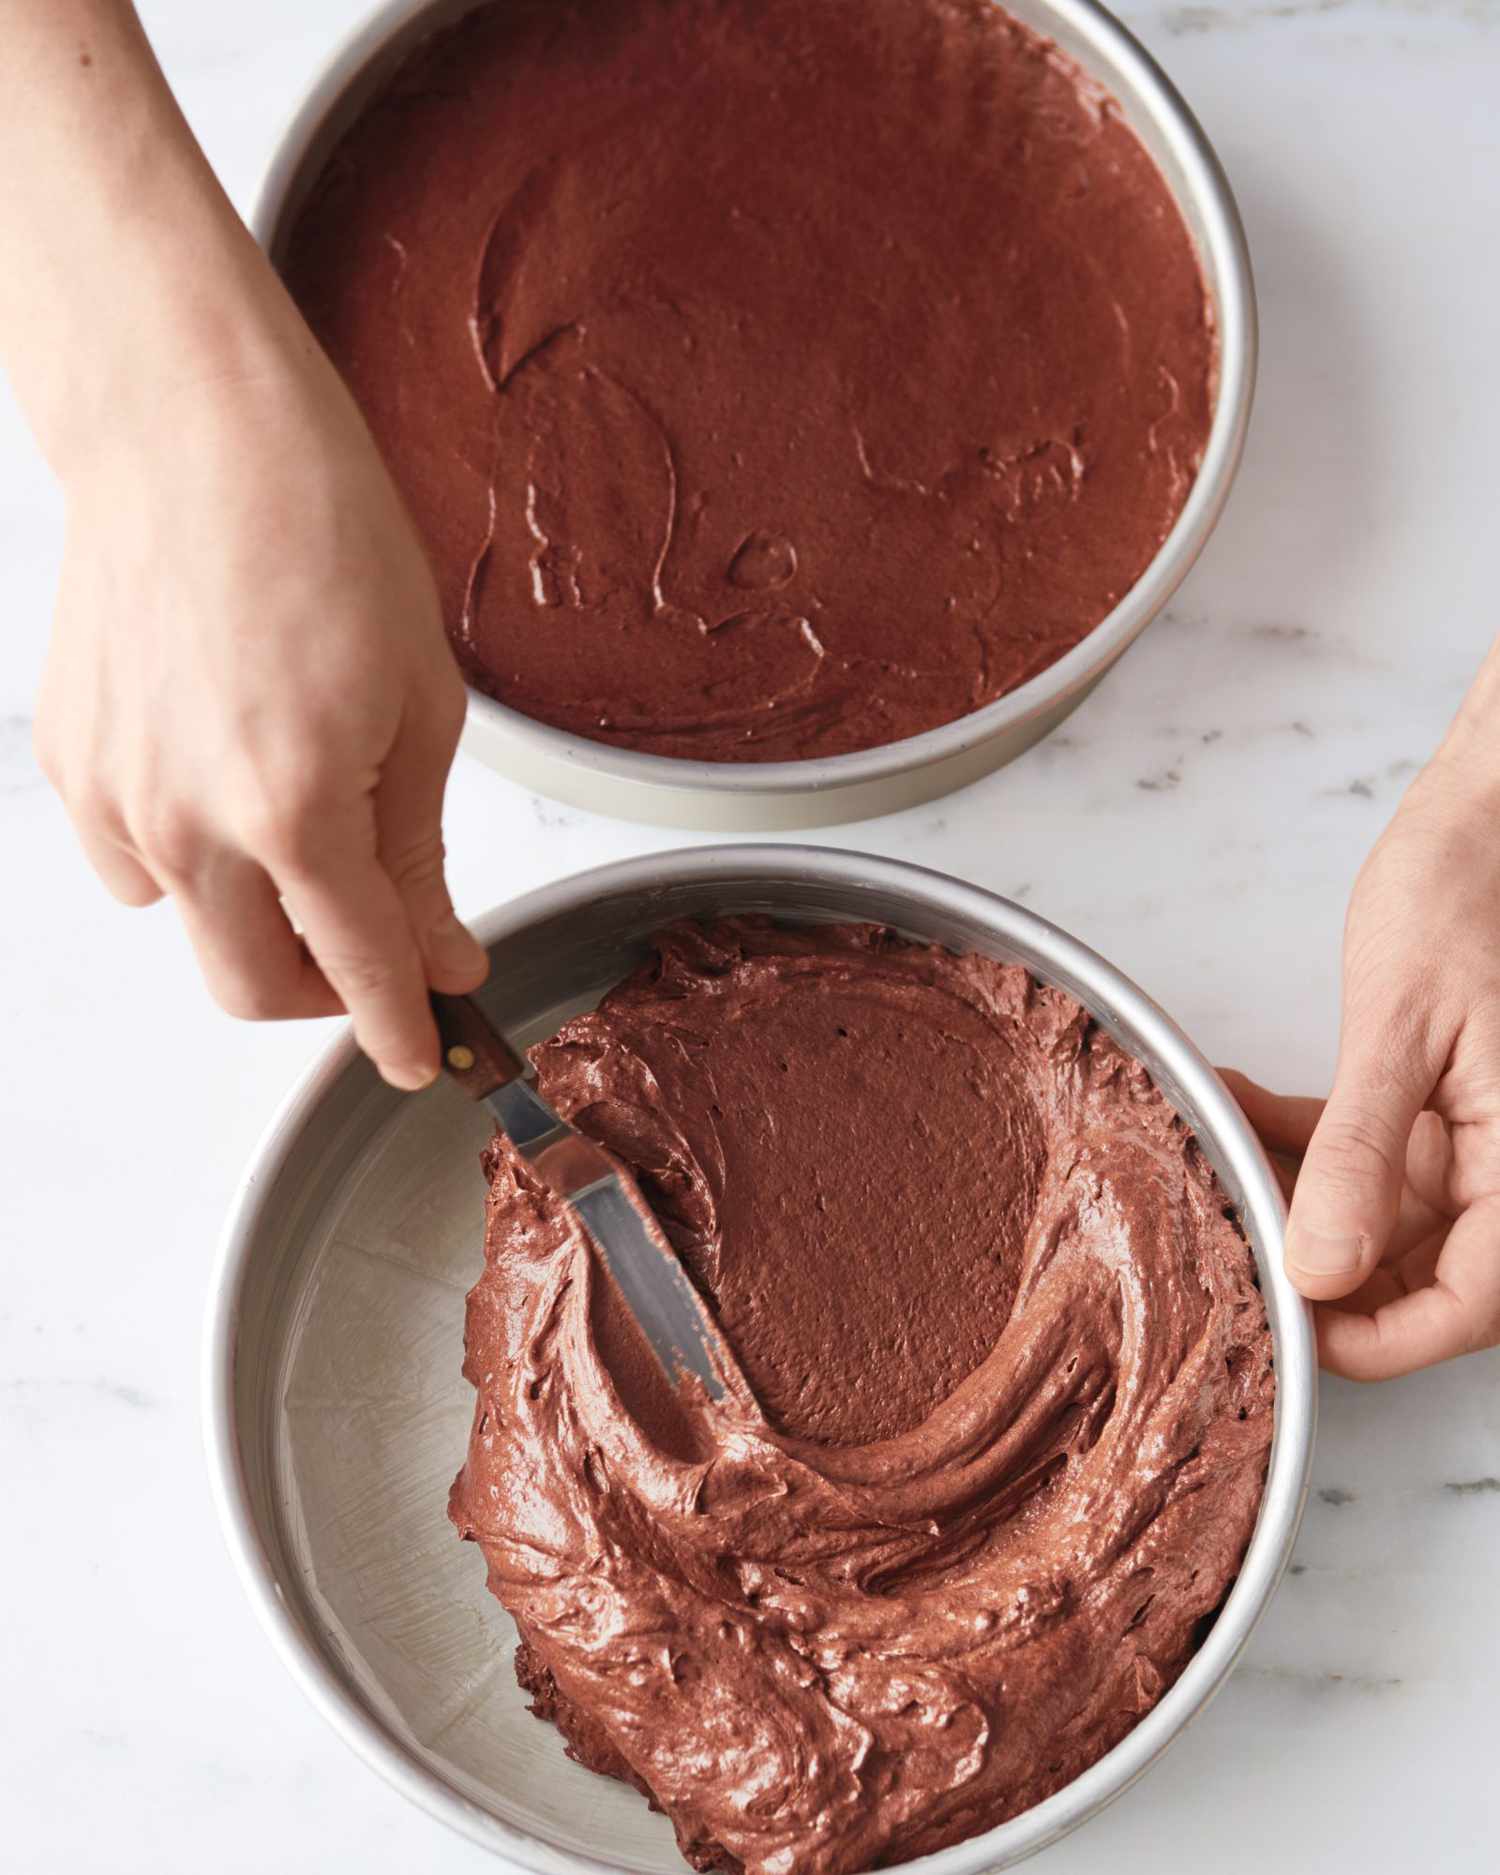 devils food cake process adding mix to pan